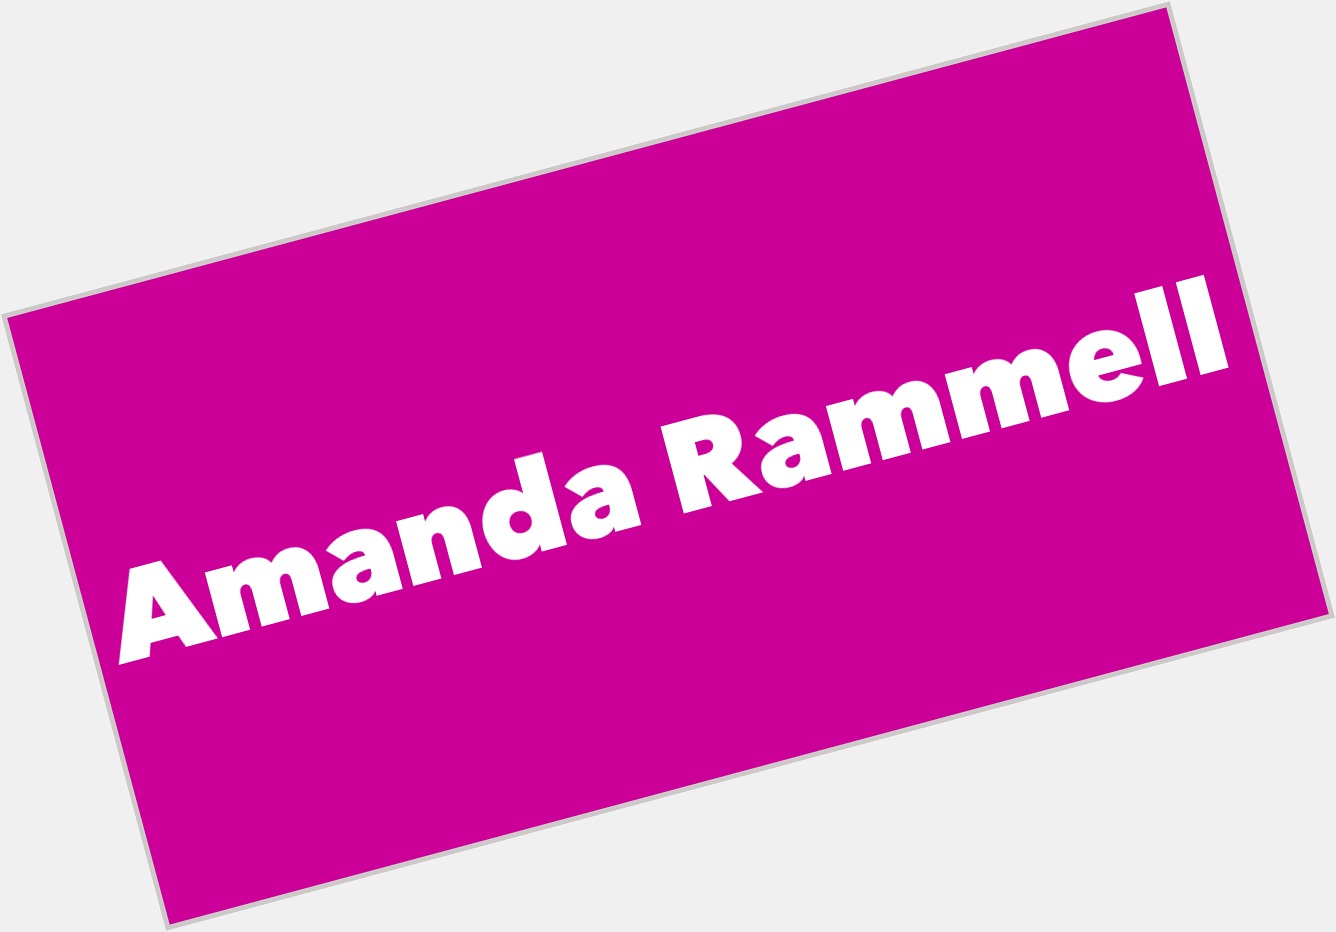 Amanda Rammell  